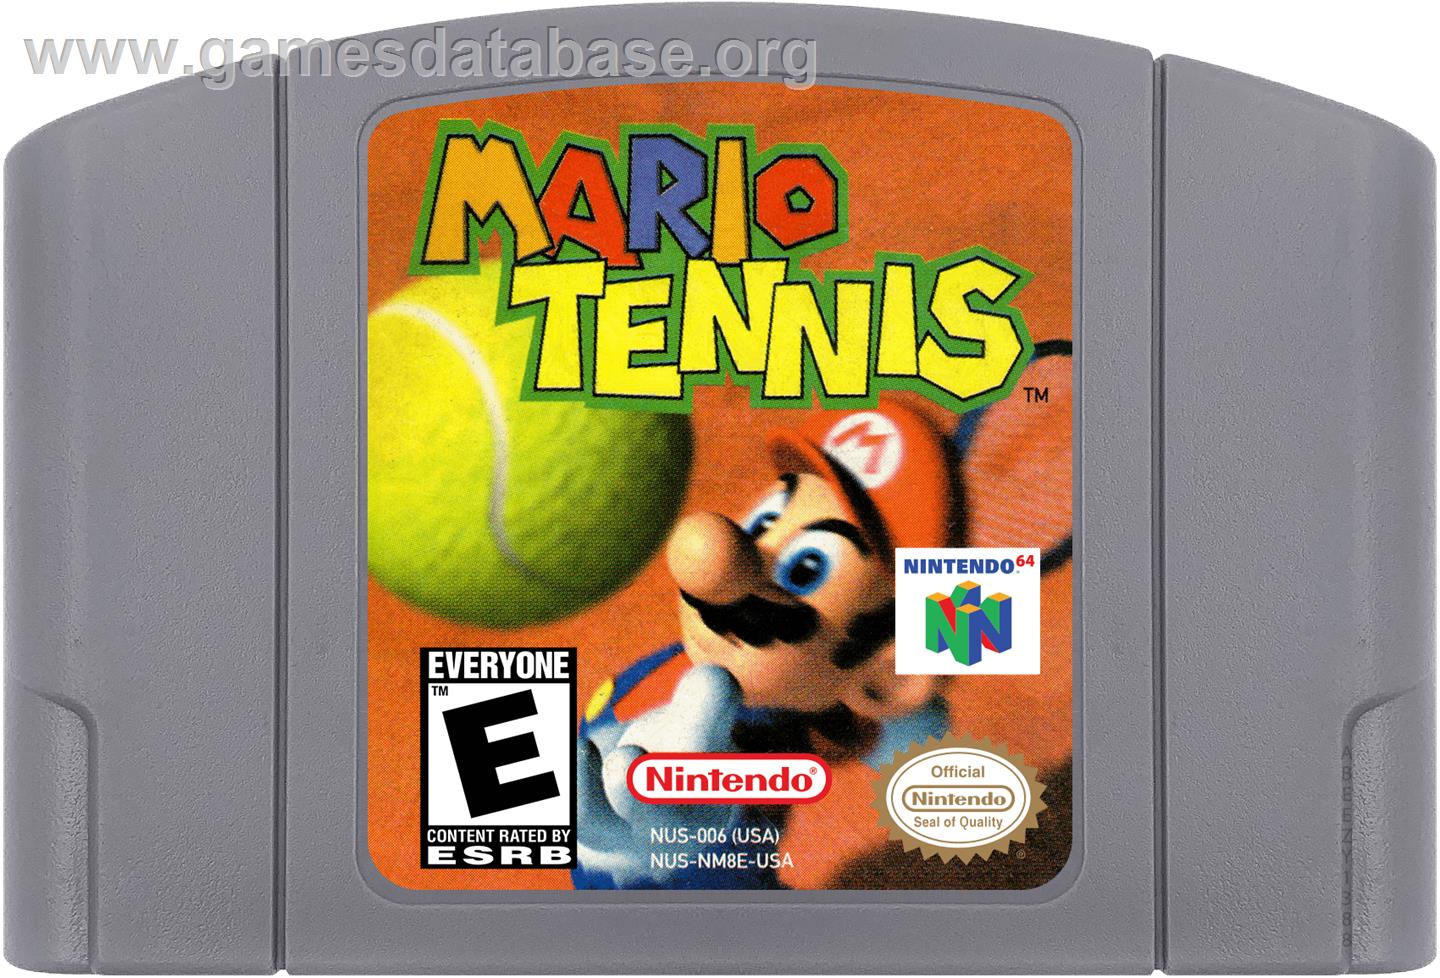 Mario Tennis - Nintendo N64 - Artwork - Cartridge